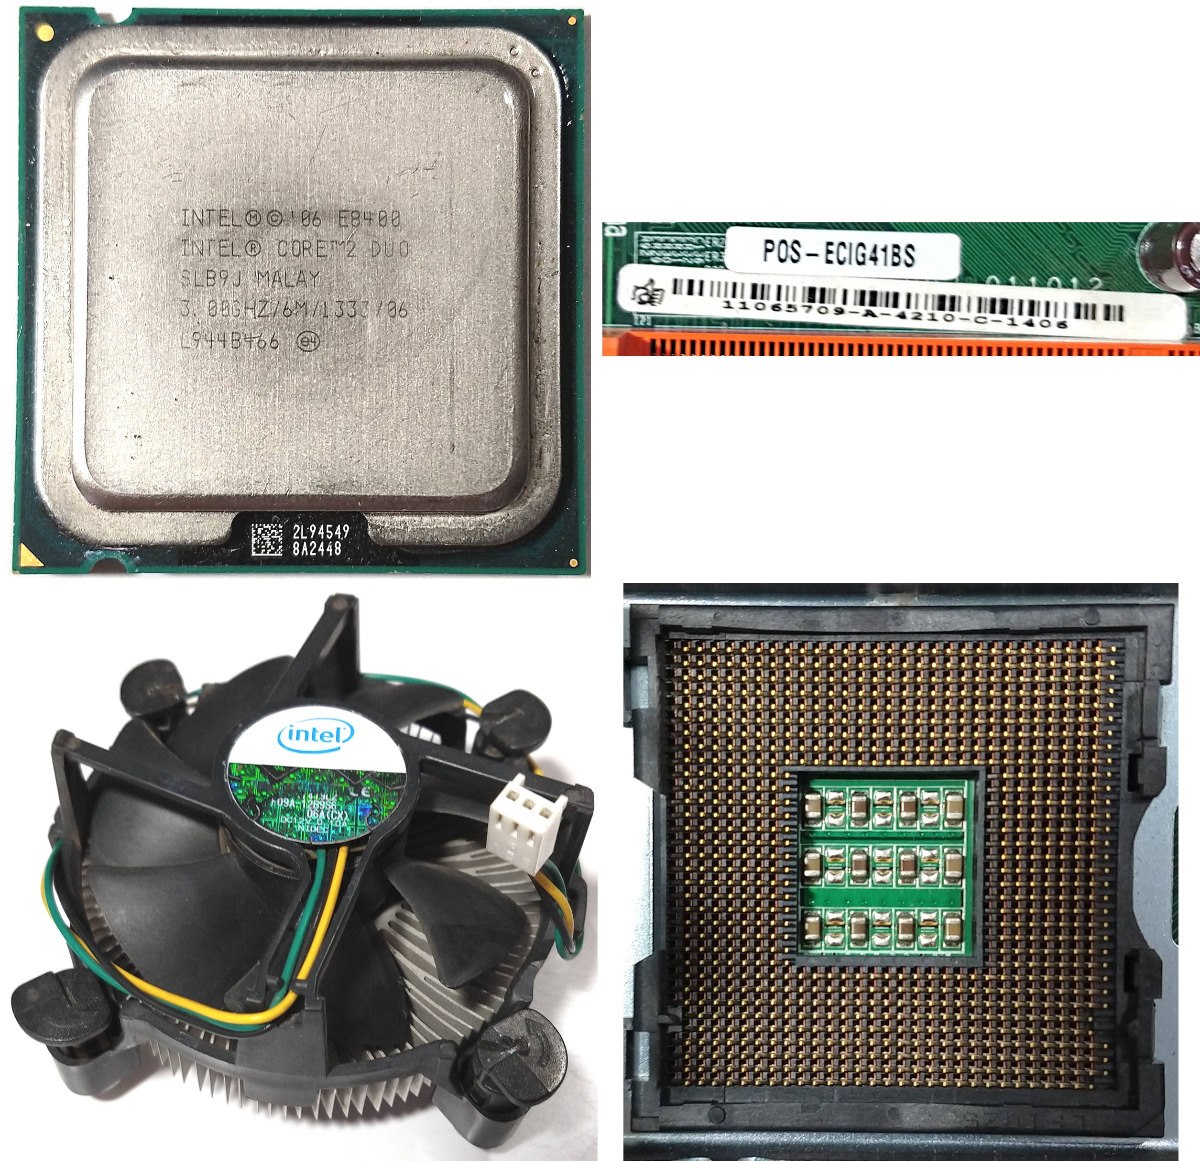 Intel Celeron E1500 Dual-Core Prozessor 2.2GHz, 512 MB Cache, Sockel 775, 800MHz FSB